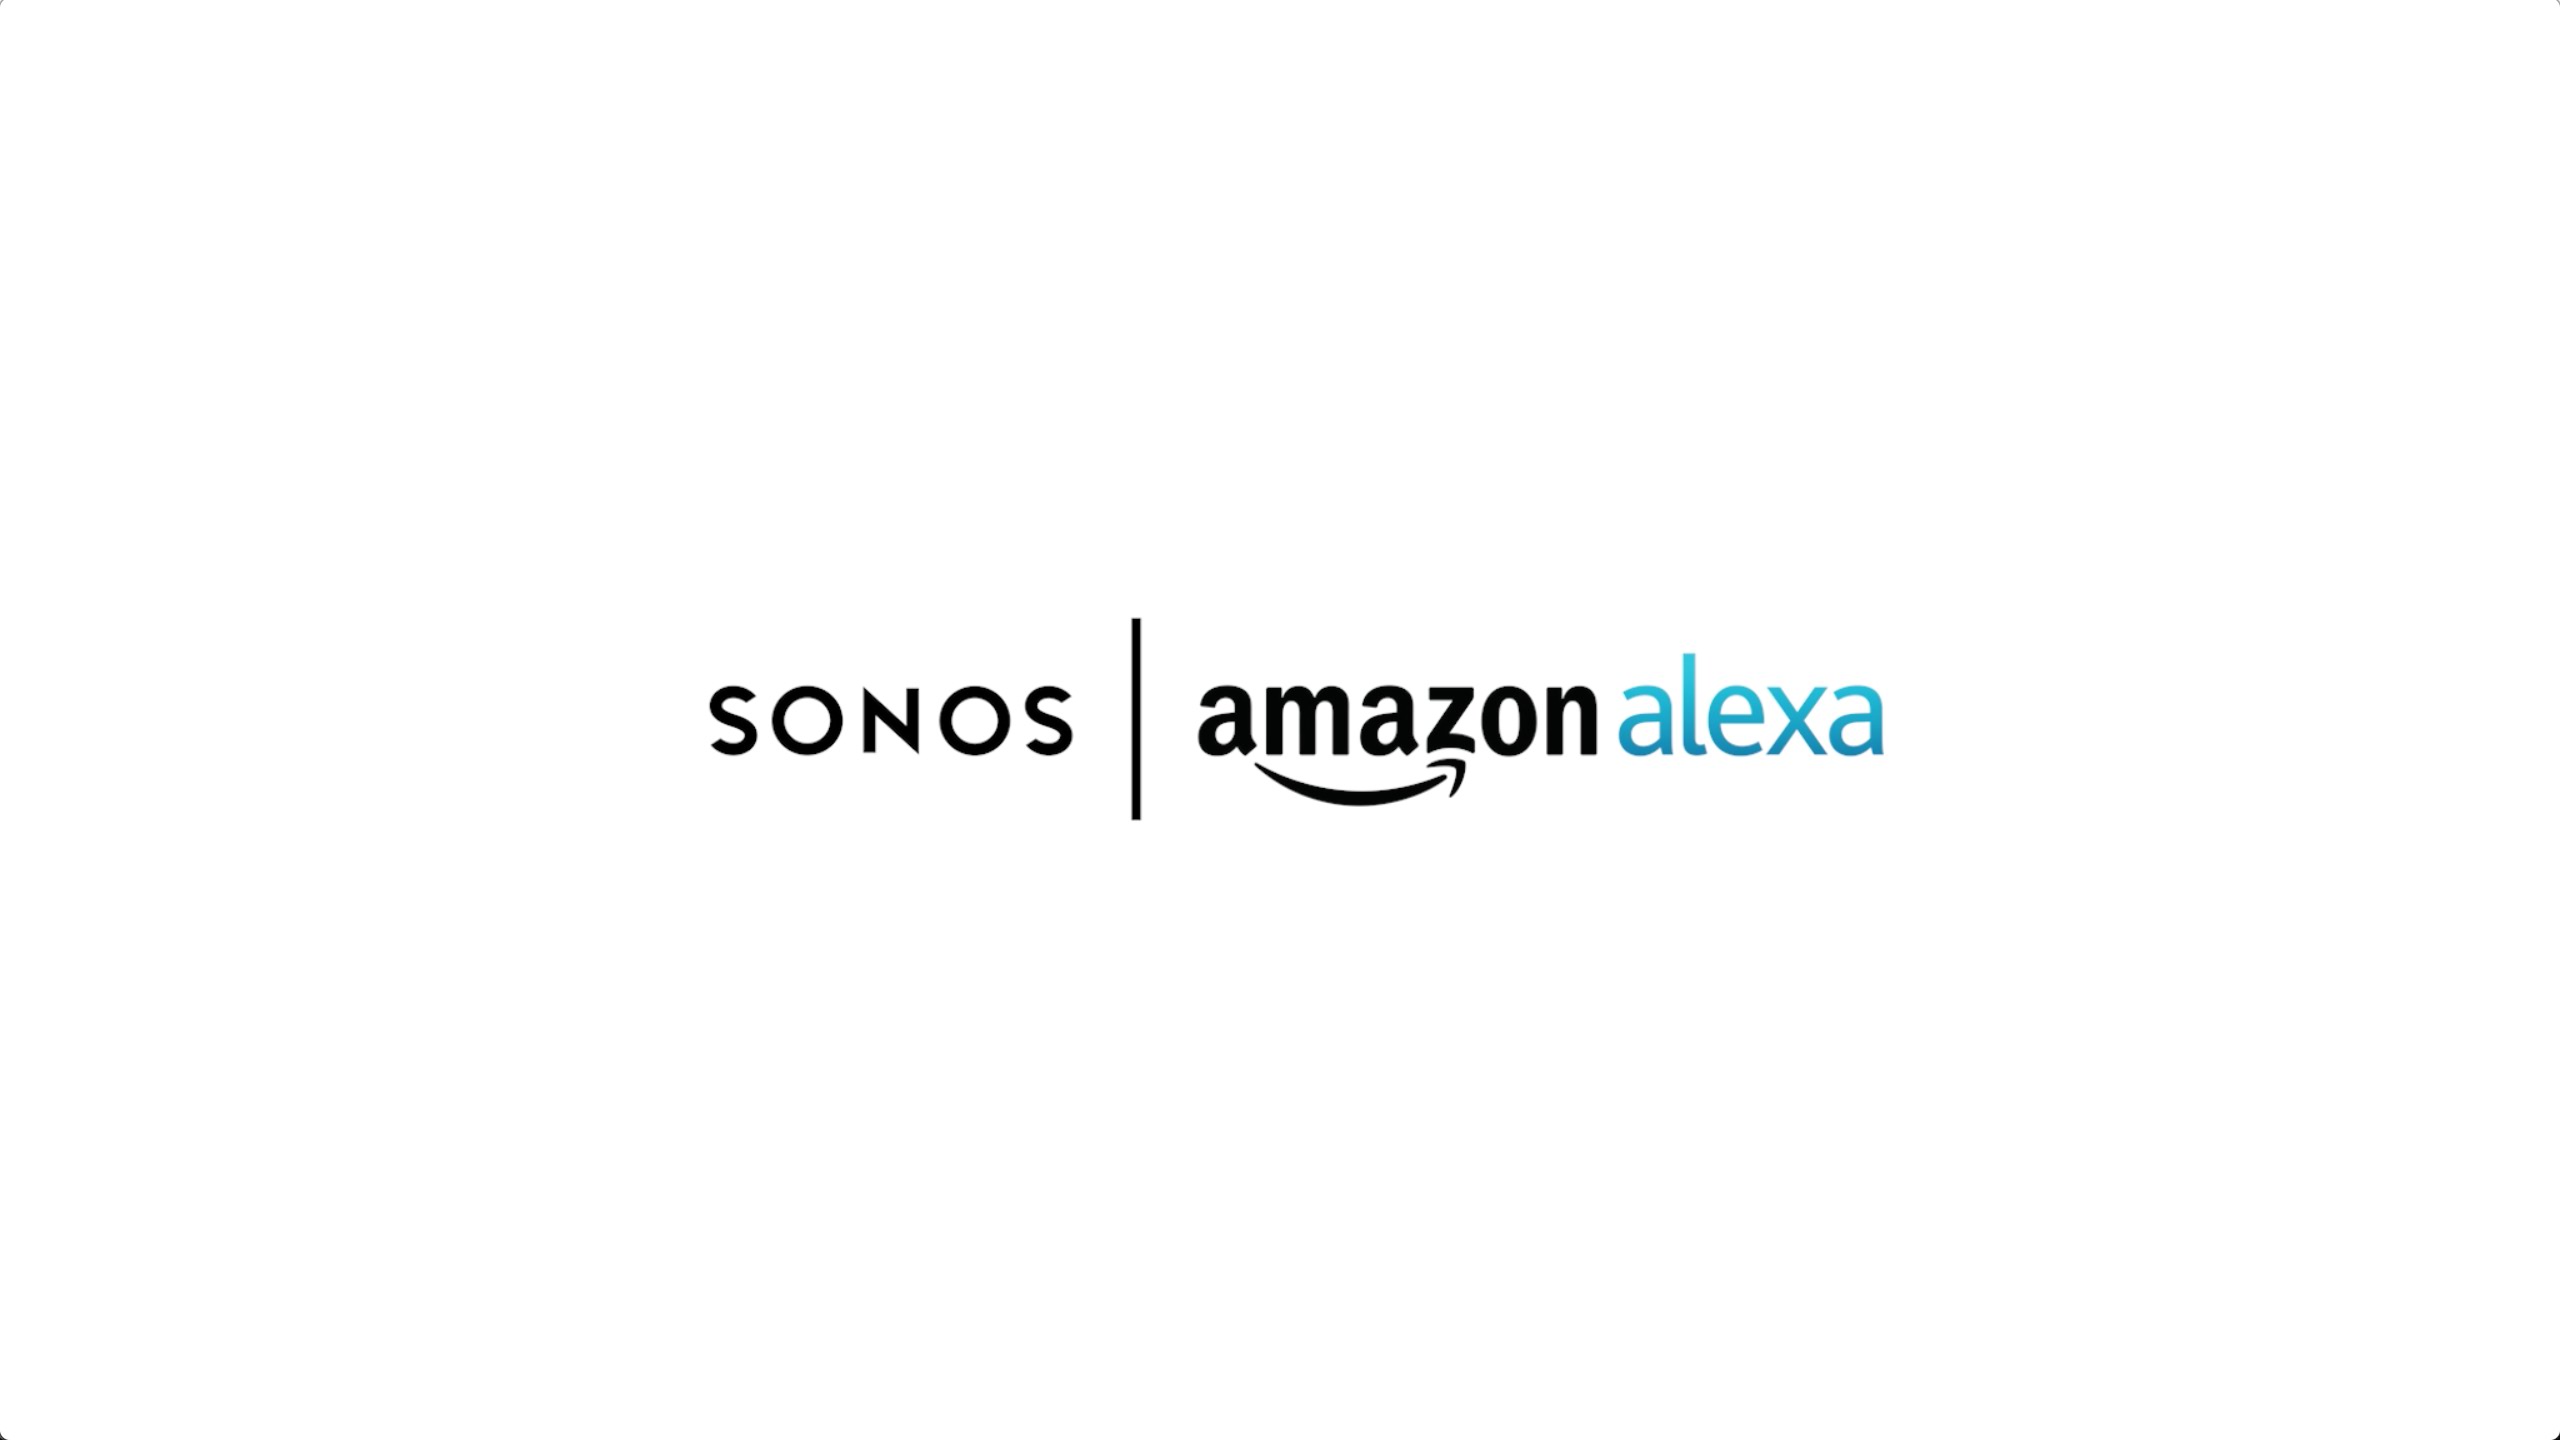 Sonos To Add Amazon Alexa Voice Control In 2017